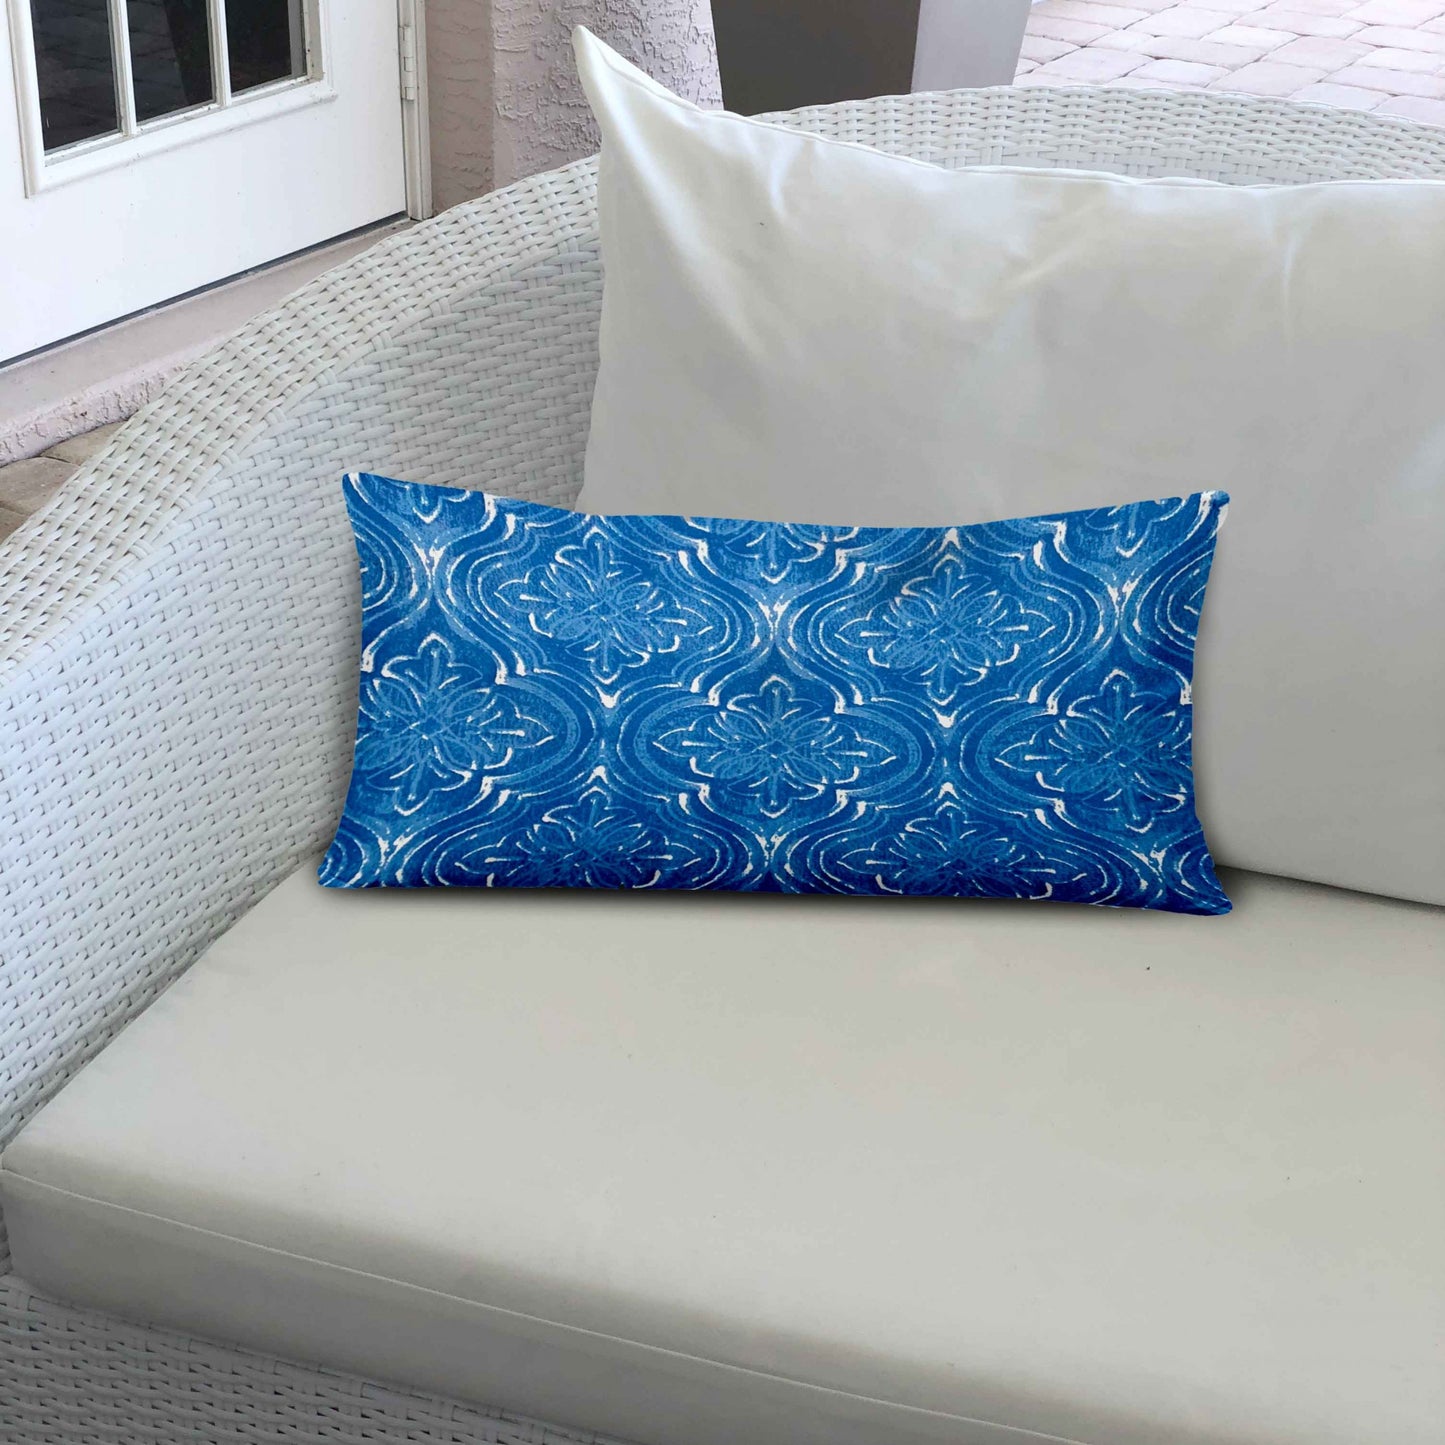 12" X 16" Blue And White Enveloped Ikat Lumbar Indoor Outdoor Pillow